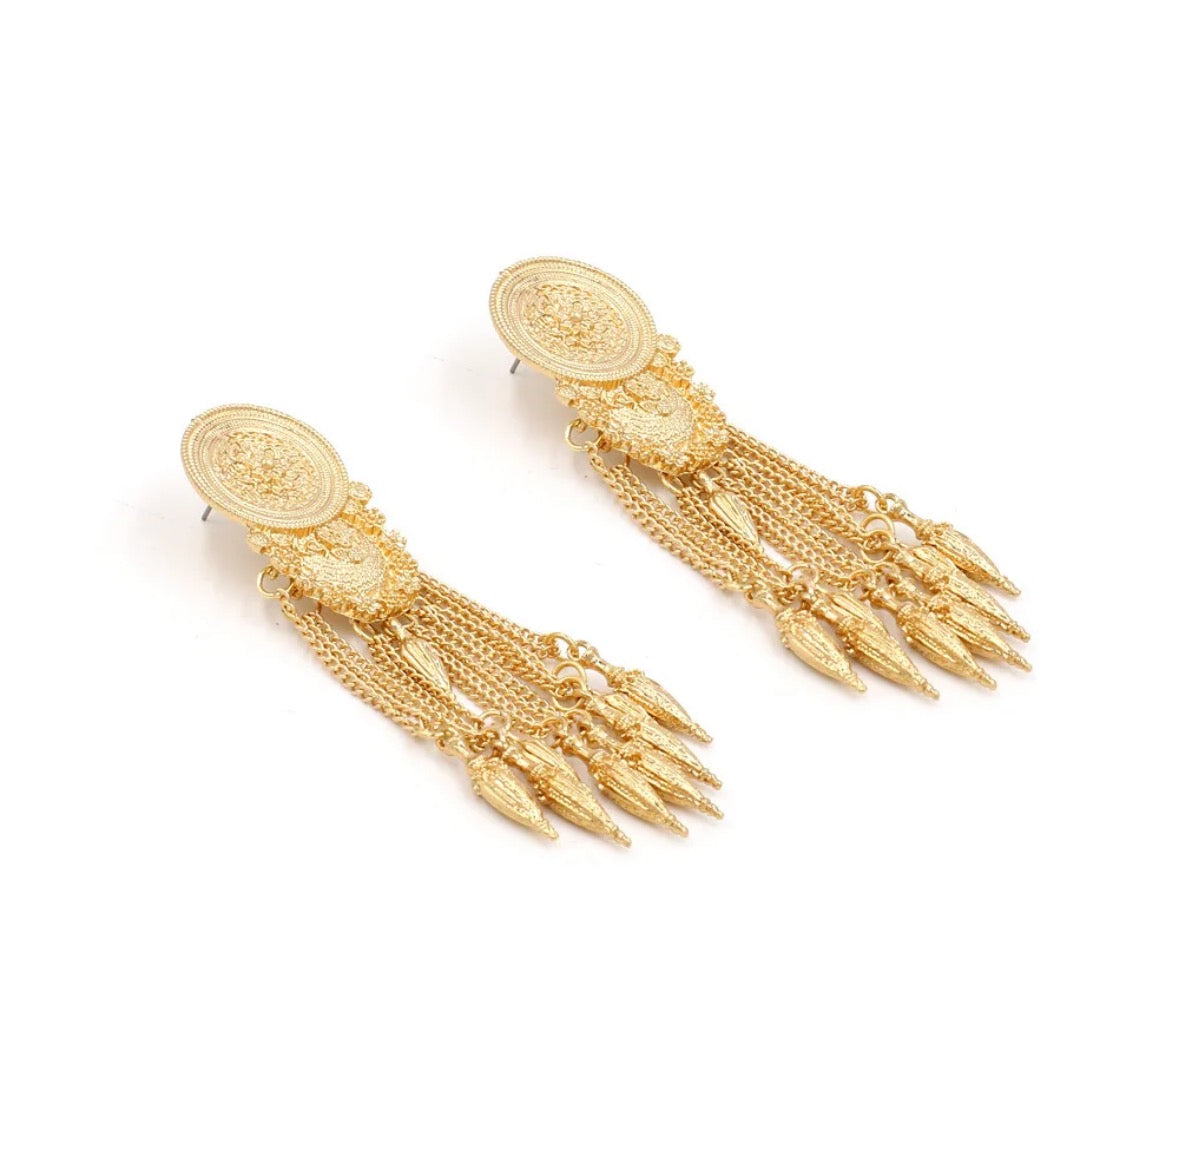 Vintage gold tassel chain earrings